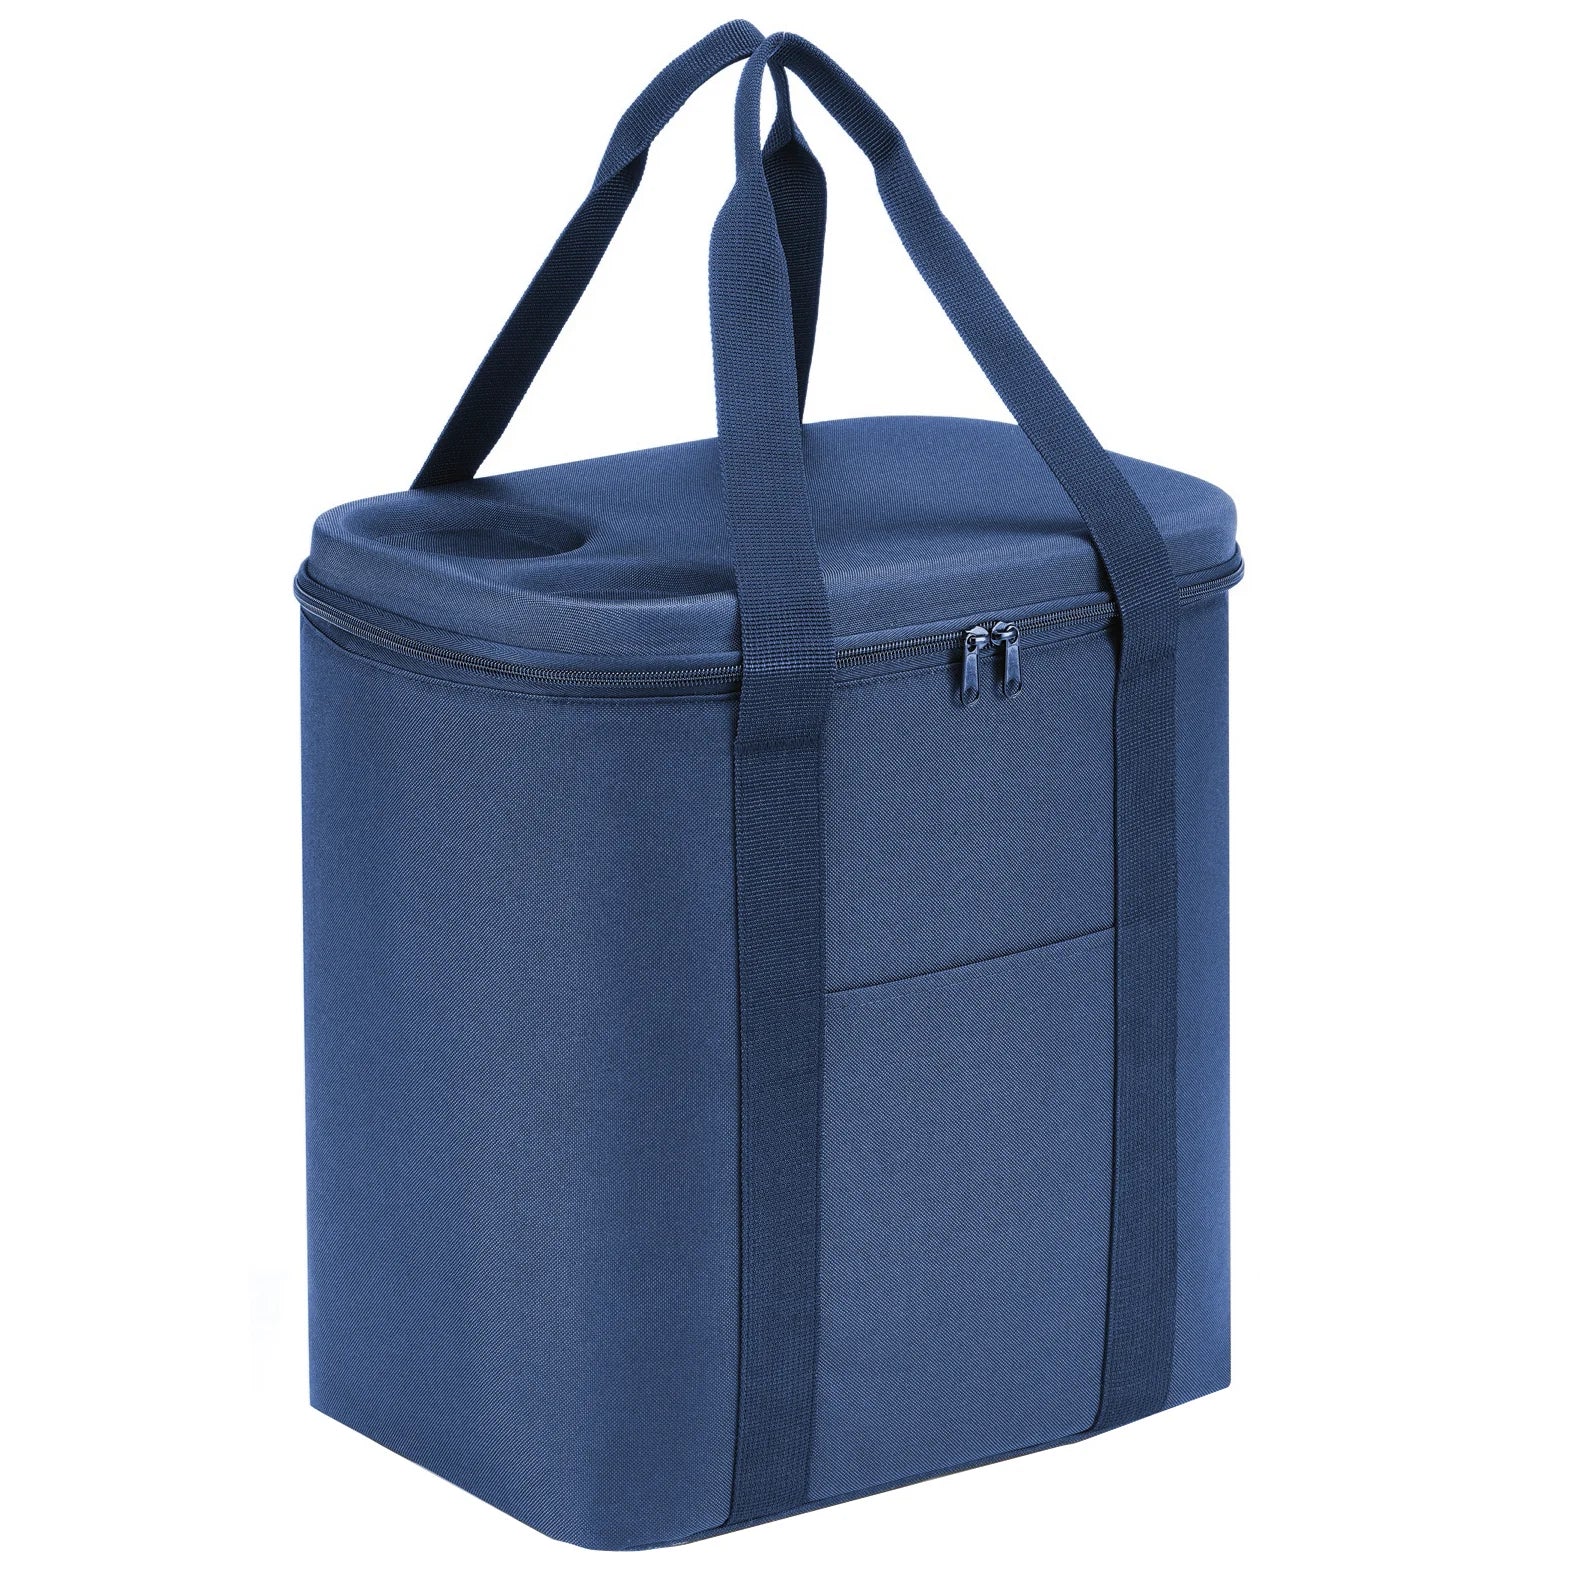 Reisenthel Shopping Coolerbag XL 41 cm - Navy